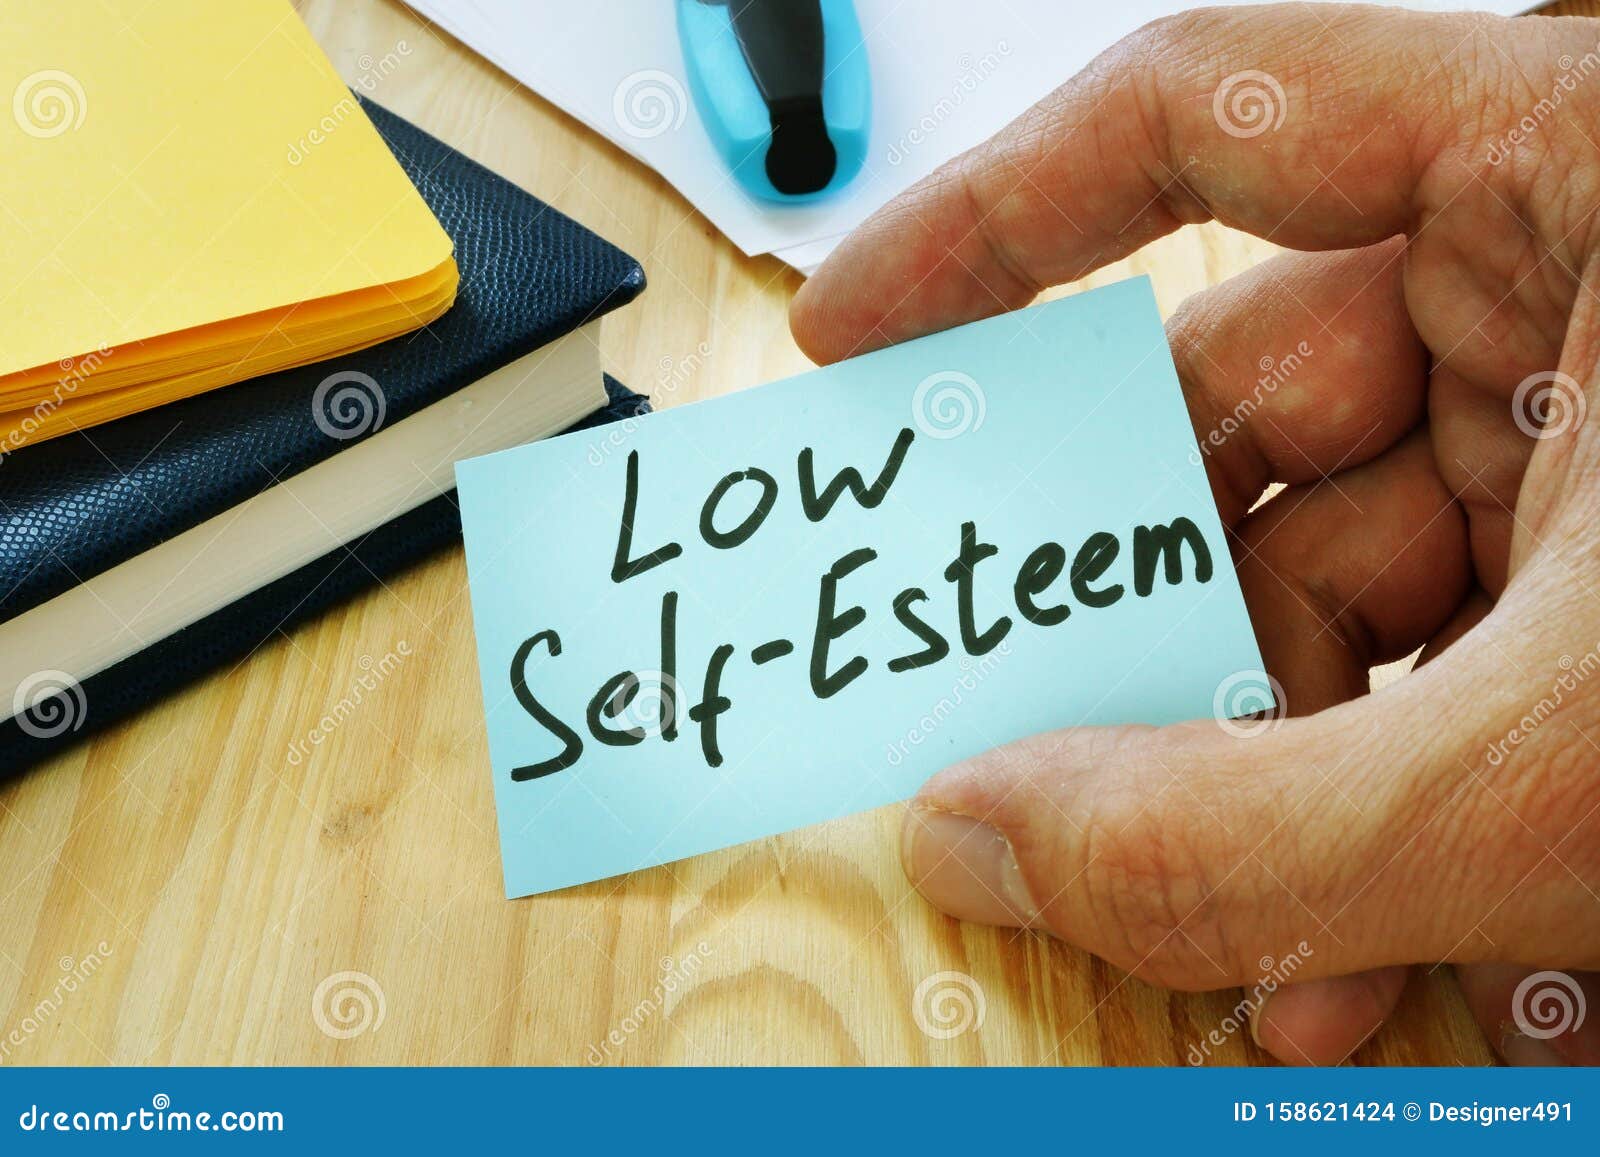 low self esteem sign in the hand